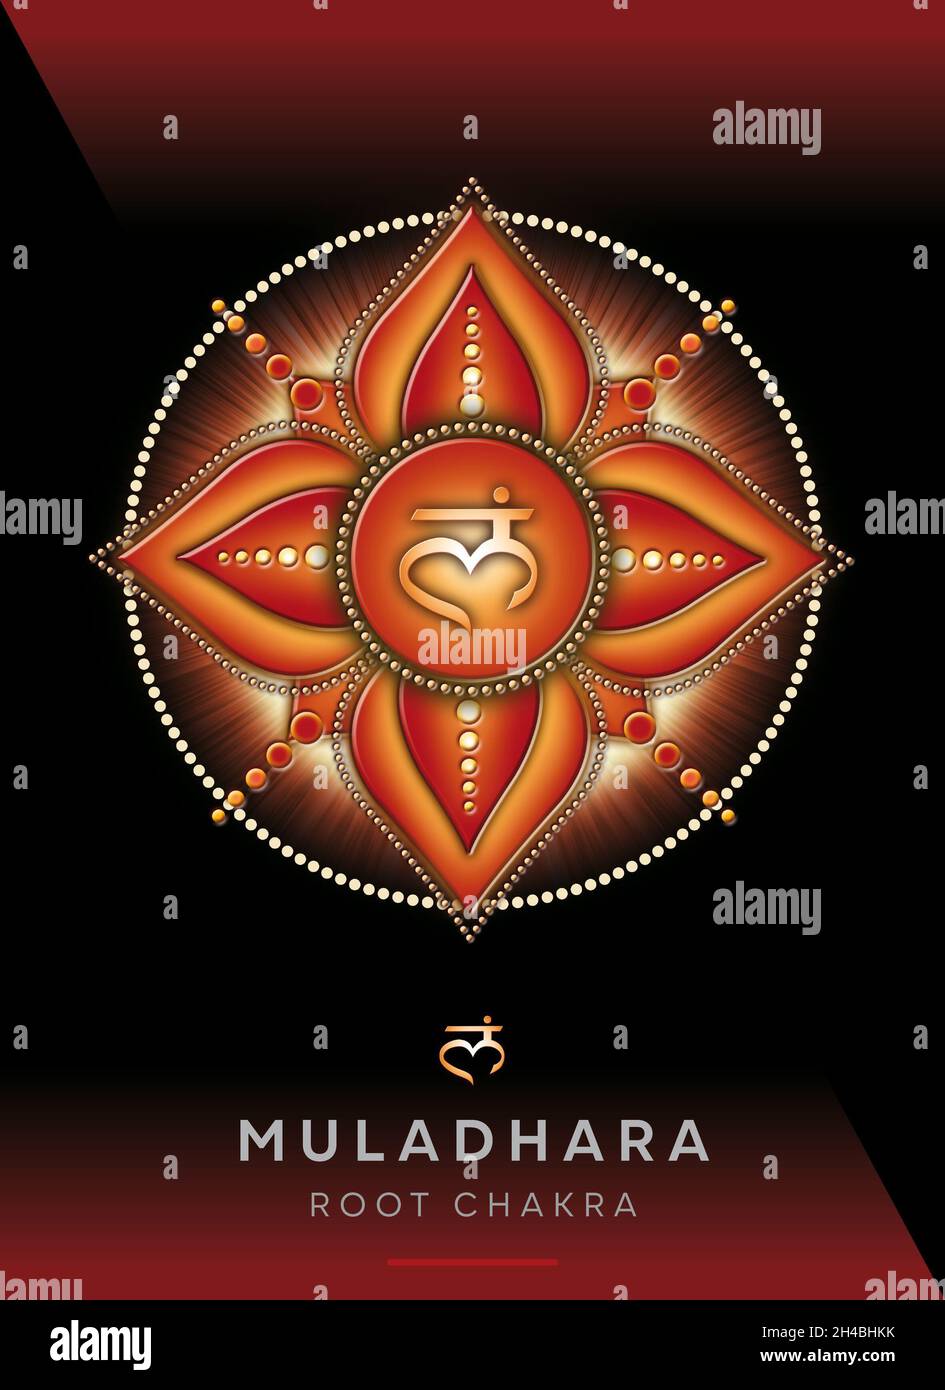 Chakra Symbols, Root Chakra - MULADHARA - Energy, Stability, Comfort, Safety - 'I AM' Stock Photo